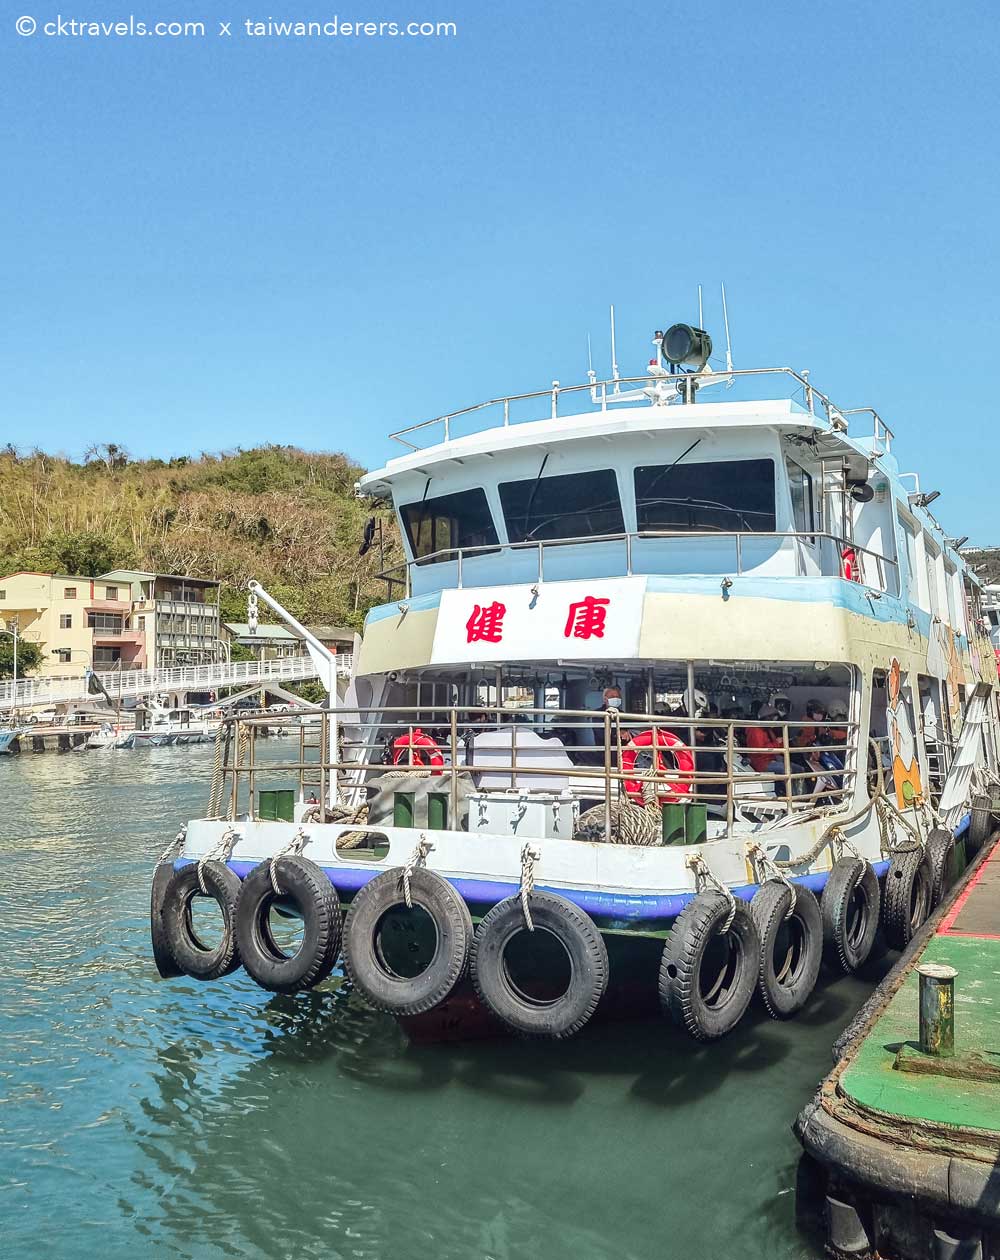 Cijin Island ferry